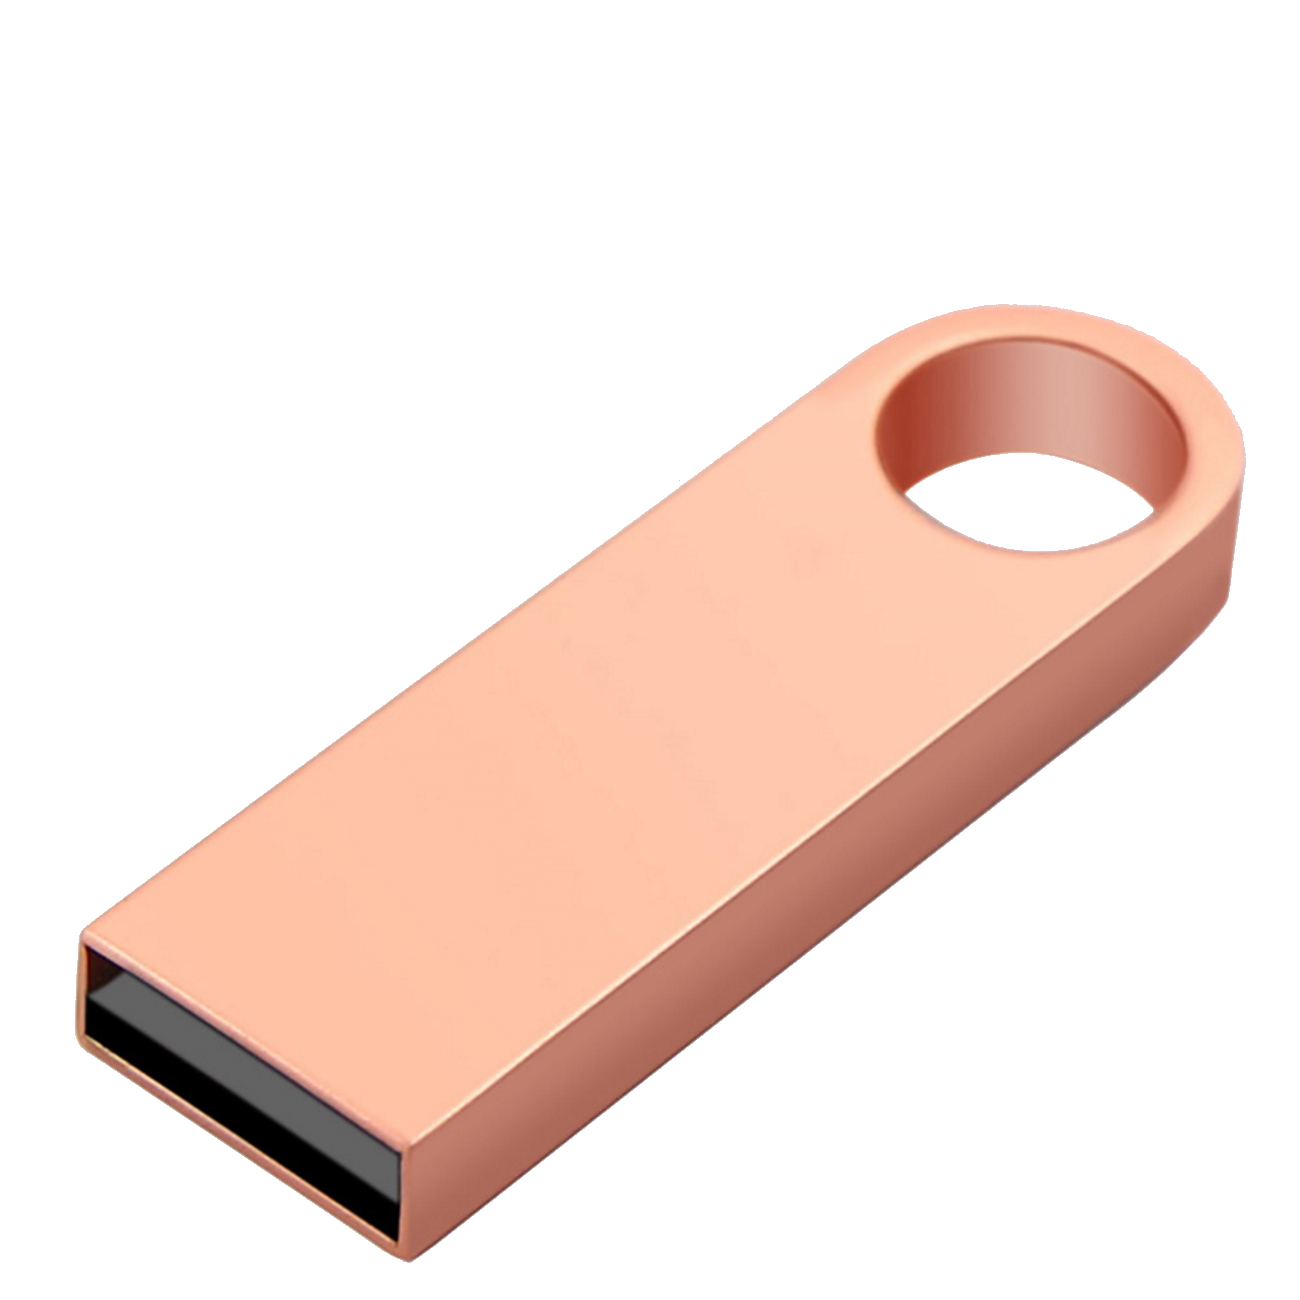 USB GERMANY ® GB) SE09 (Rosegold, 1 USB-Stick